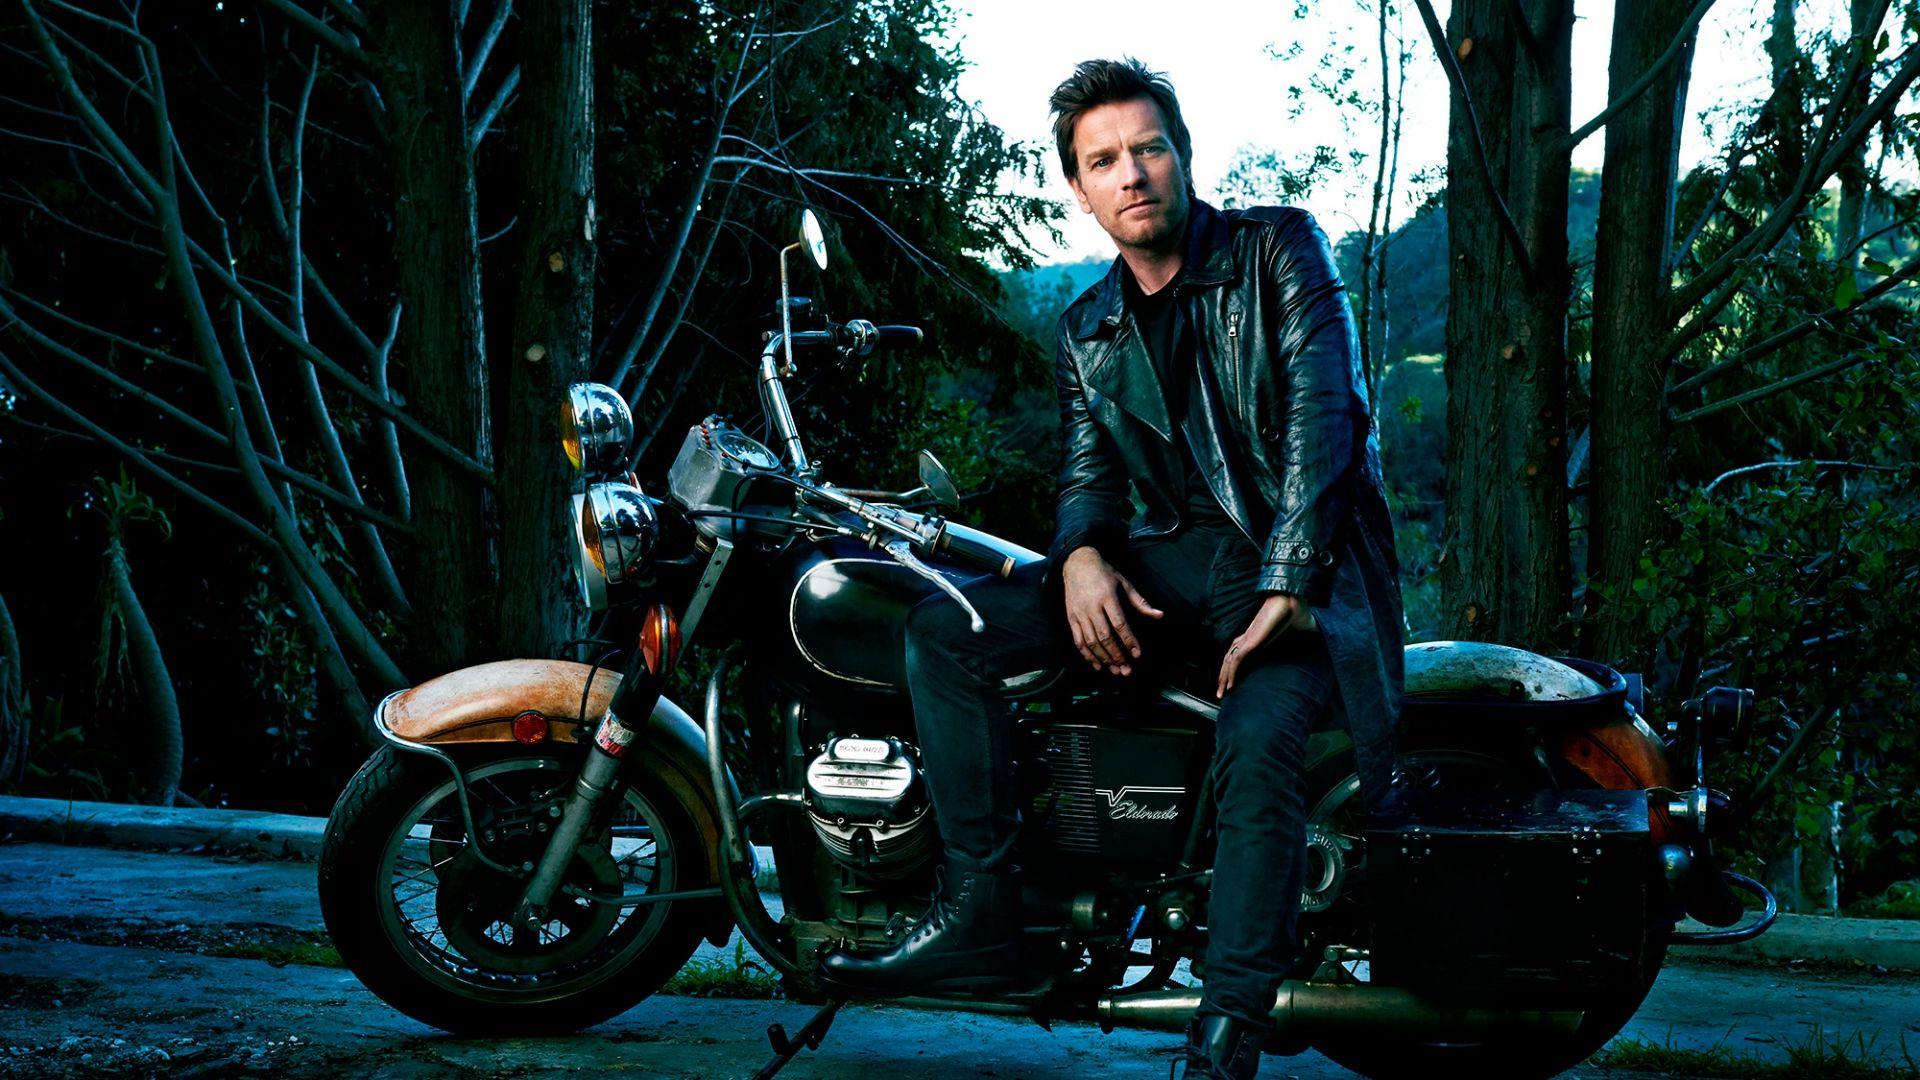 Full HD Wallpaper ewan mcgregor retro motorcycle stylish leather